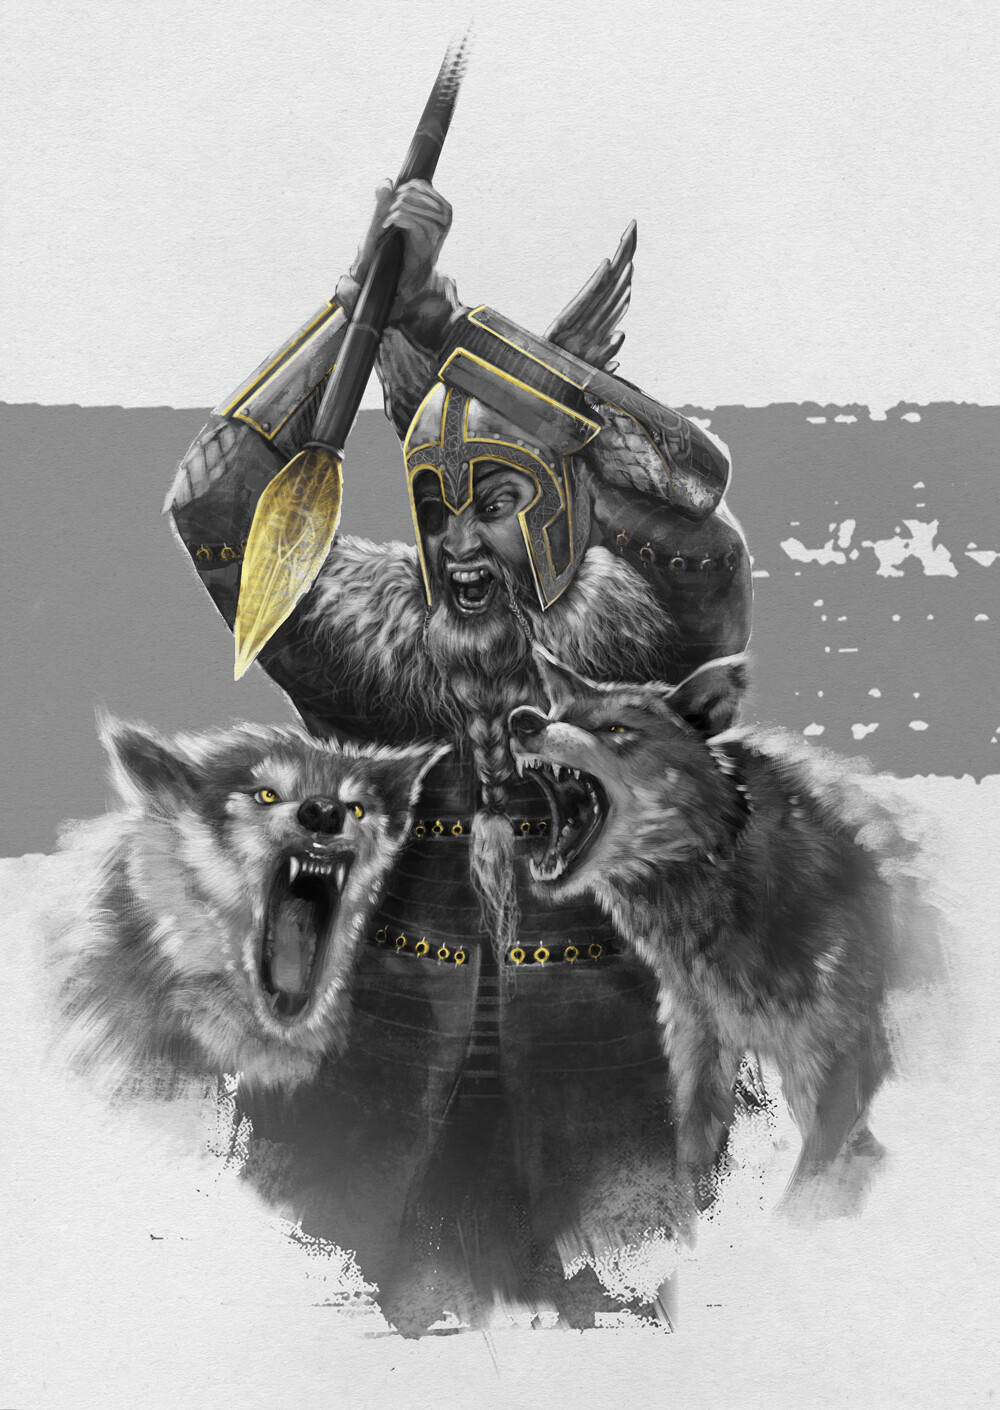 Odin the warrior